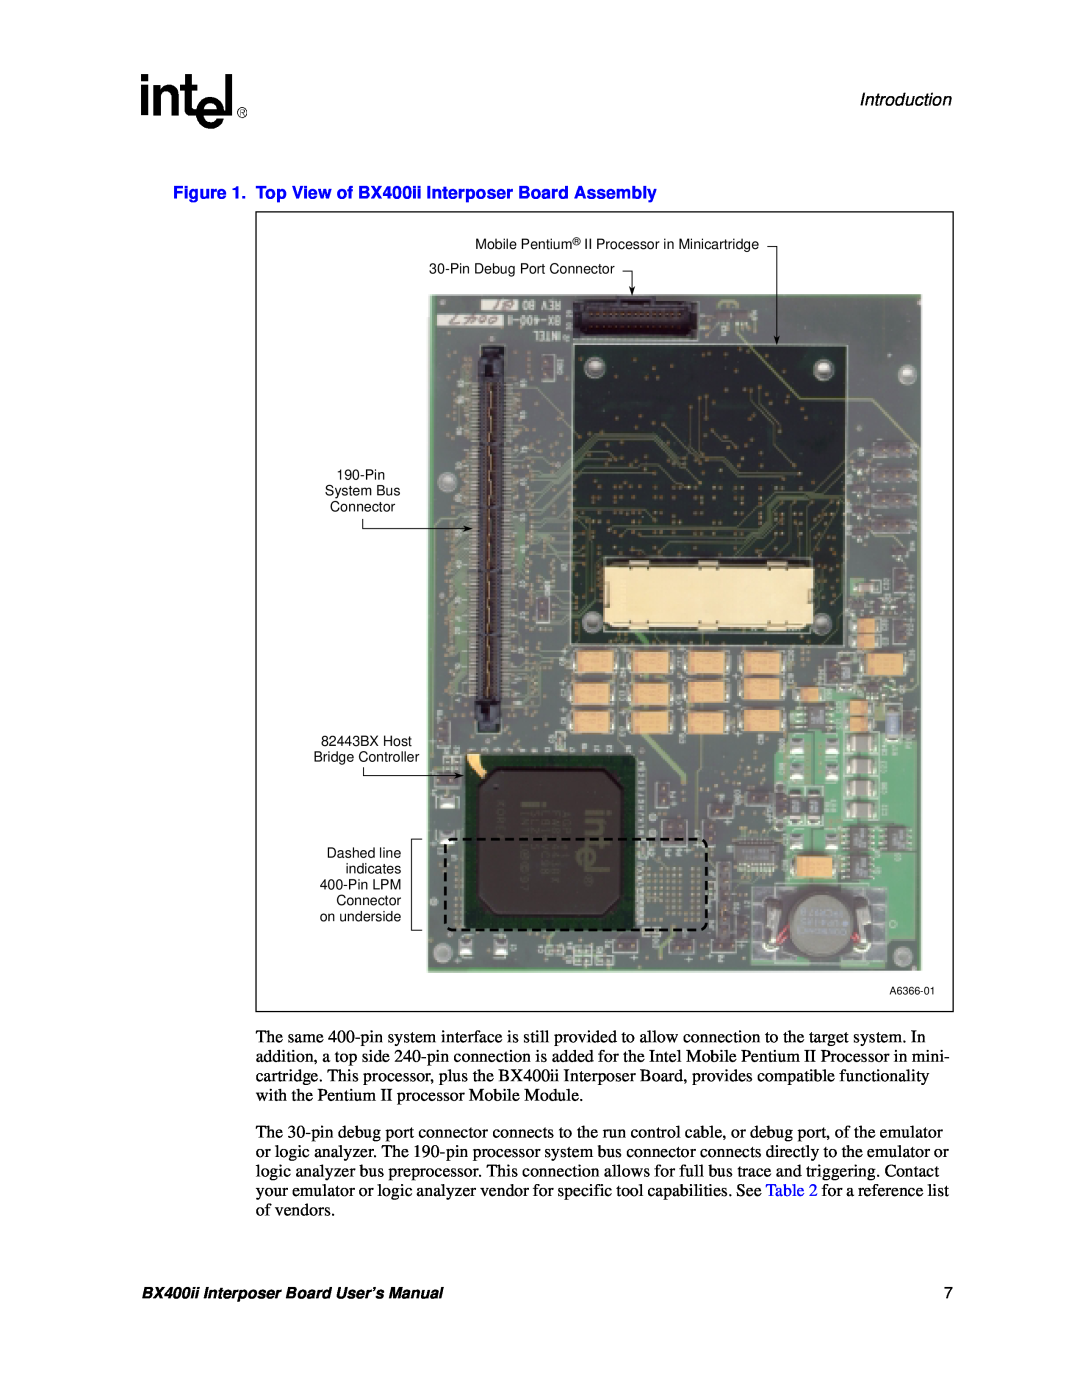 Intel BX400II user manual Introduction, Mobile Pentium II Processor in Minicartridge, PinDebug Port Connector 